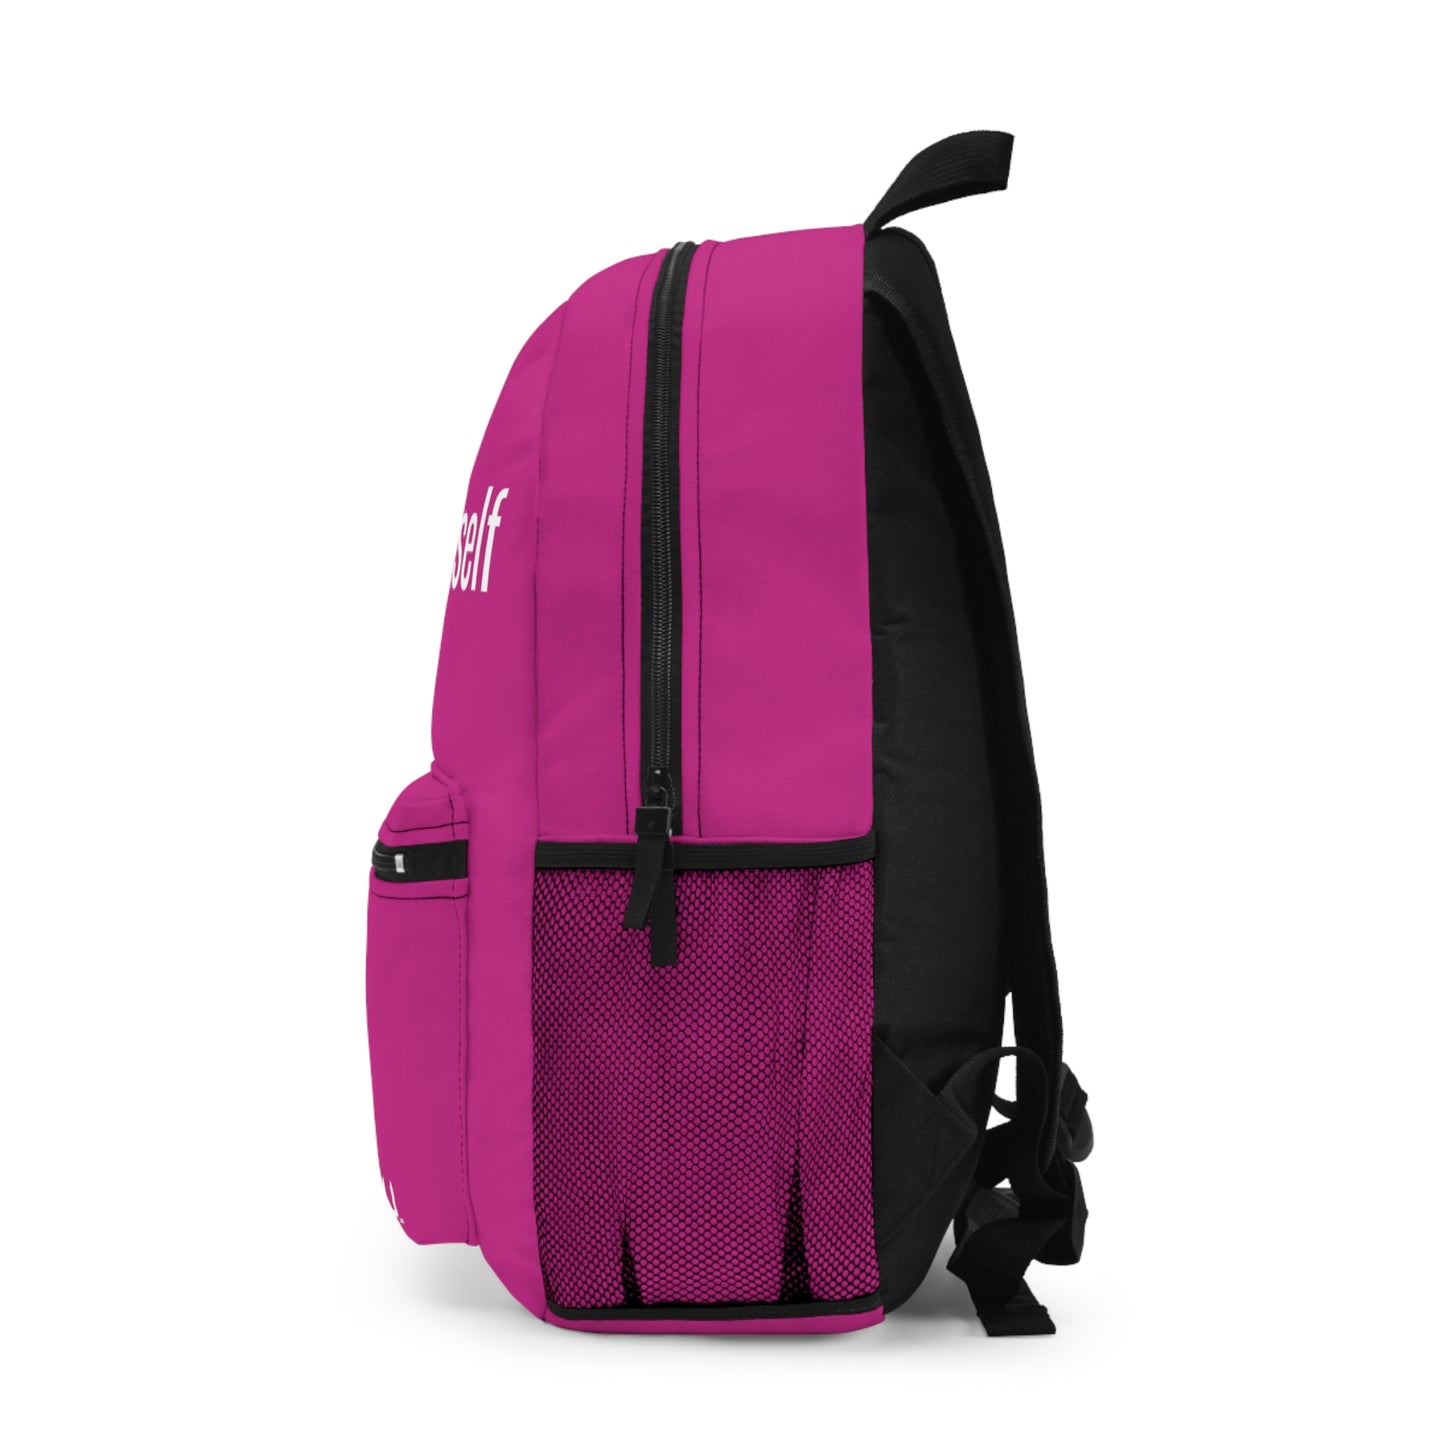 PINK DQU Backpack